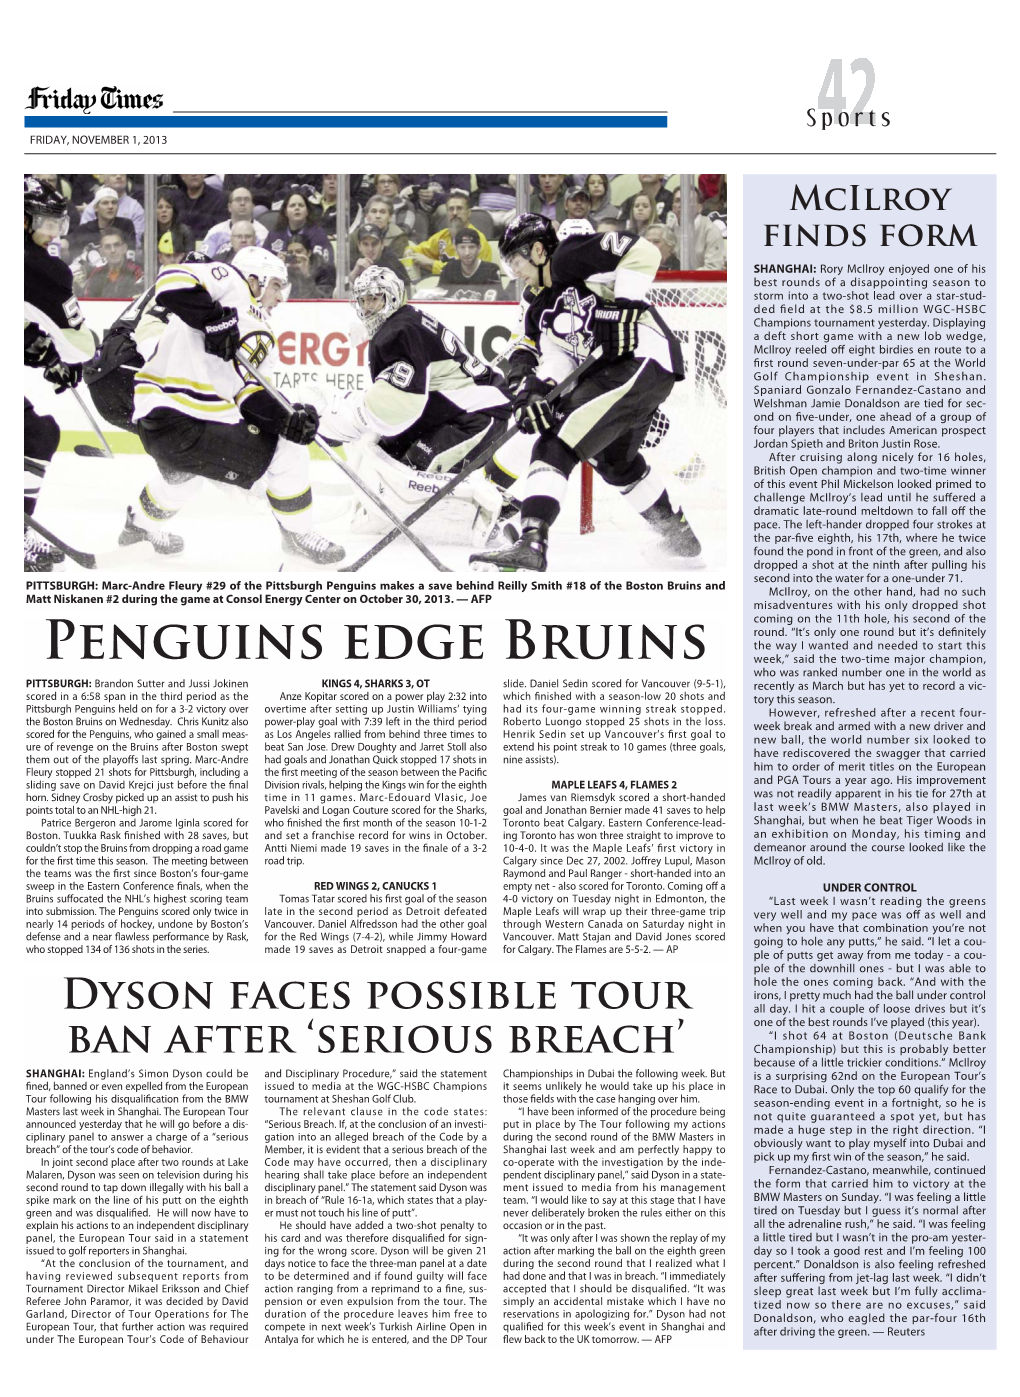 Penguins Edge Bruins